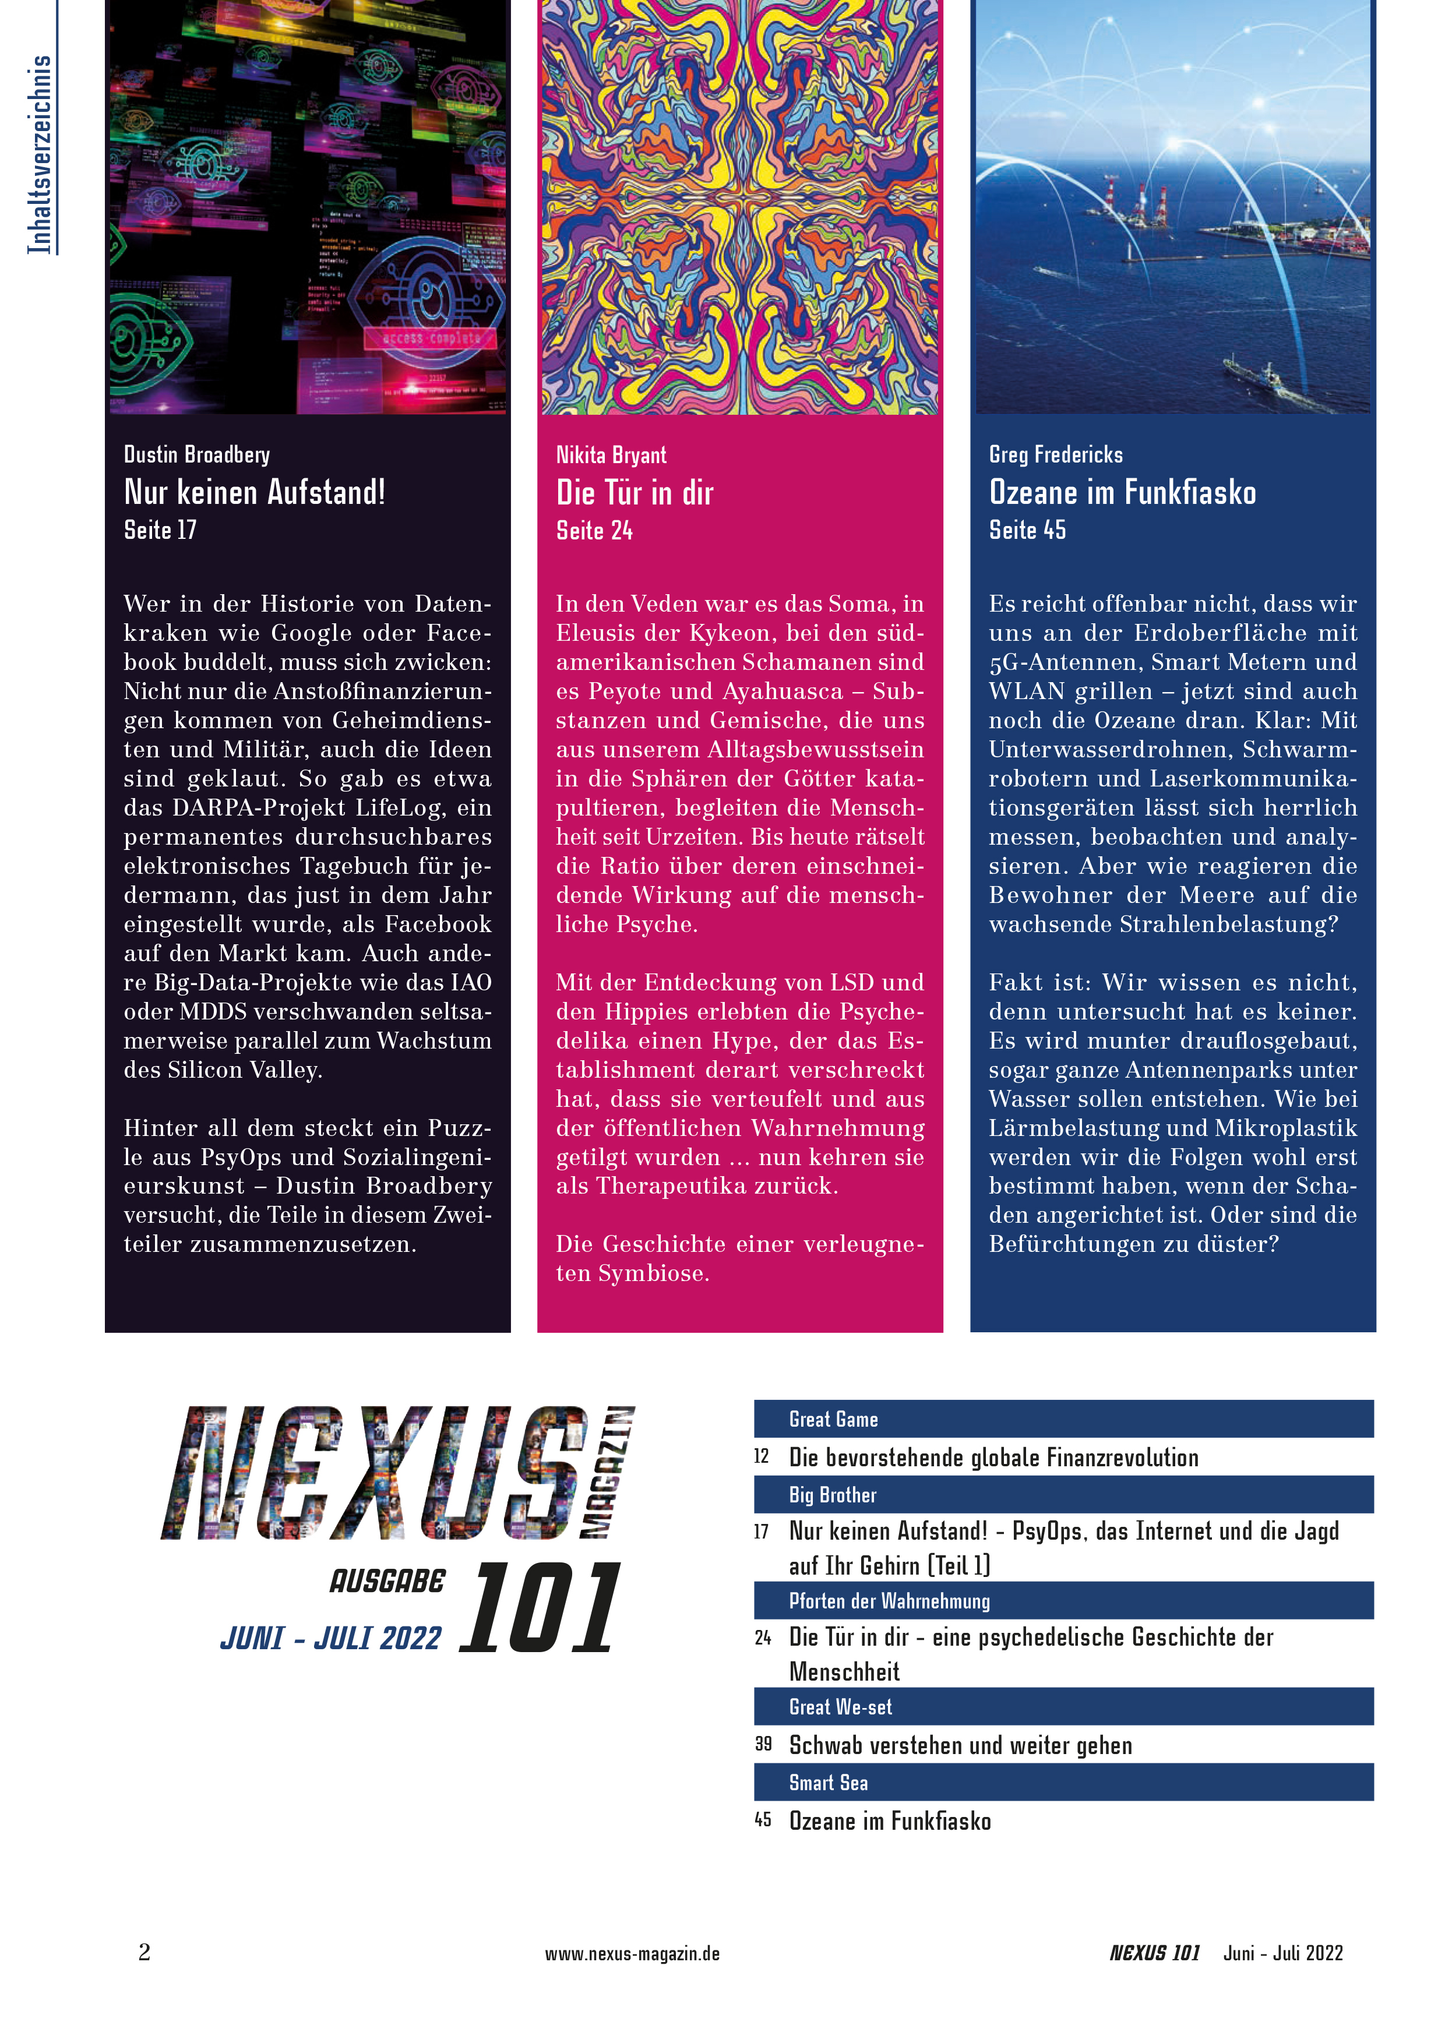 NEXUS-Magazin 101